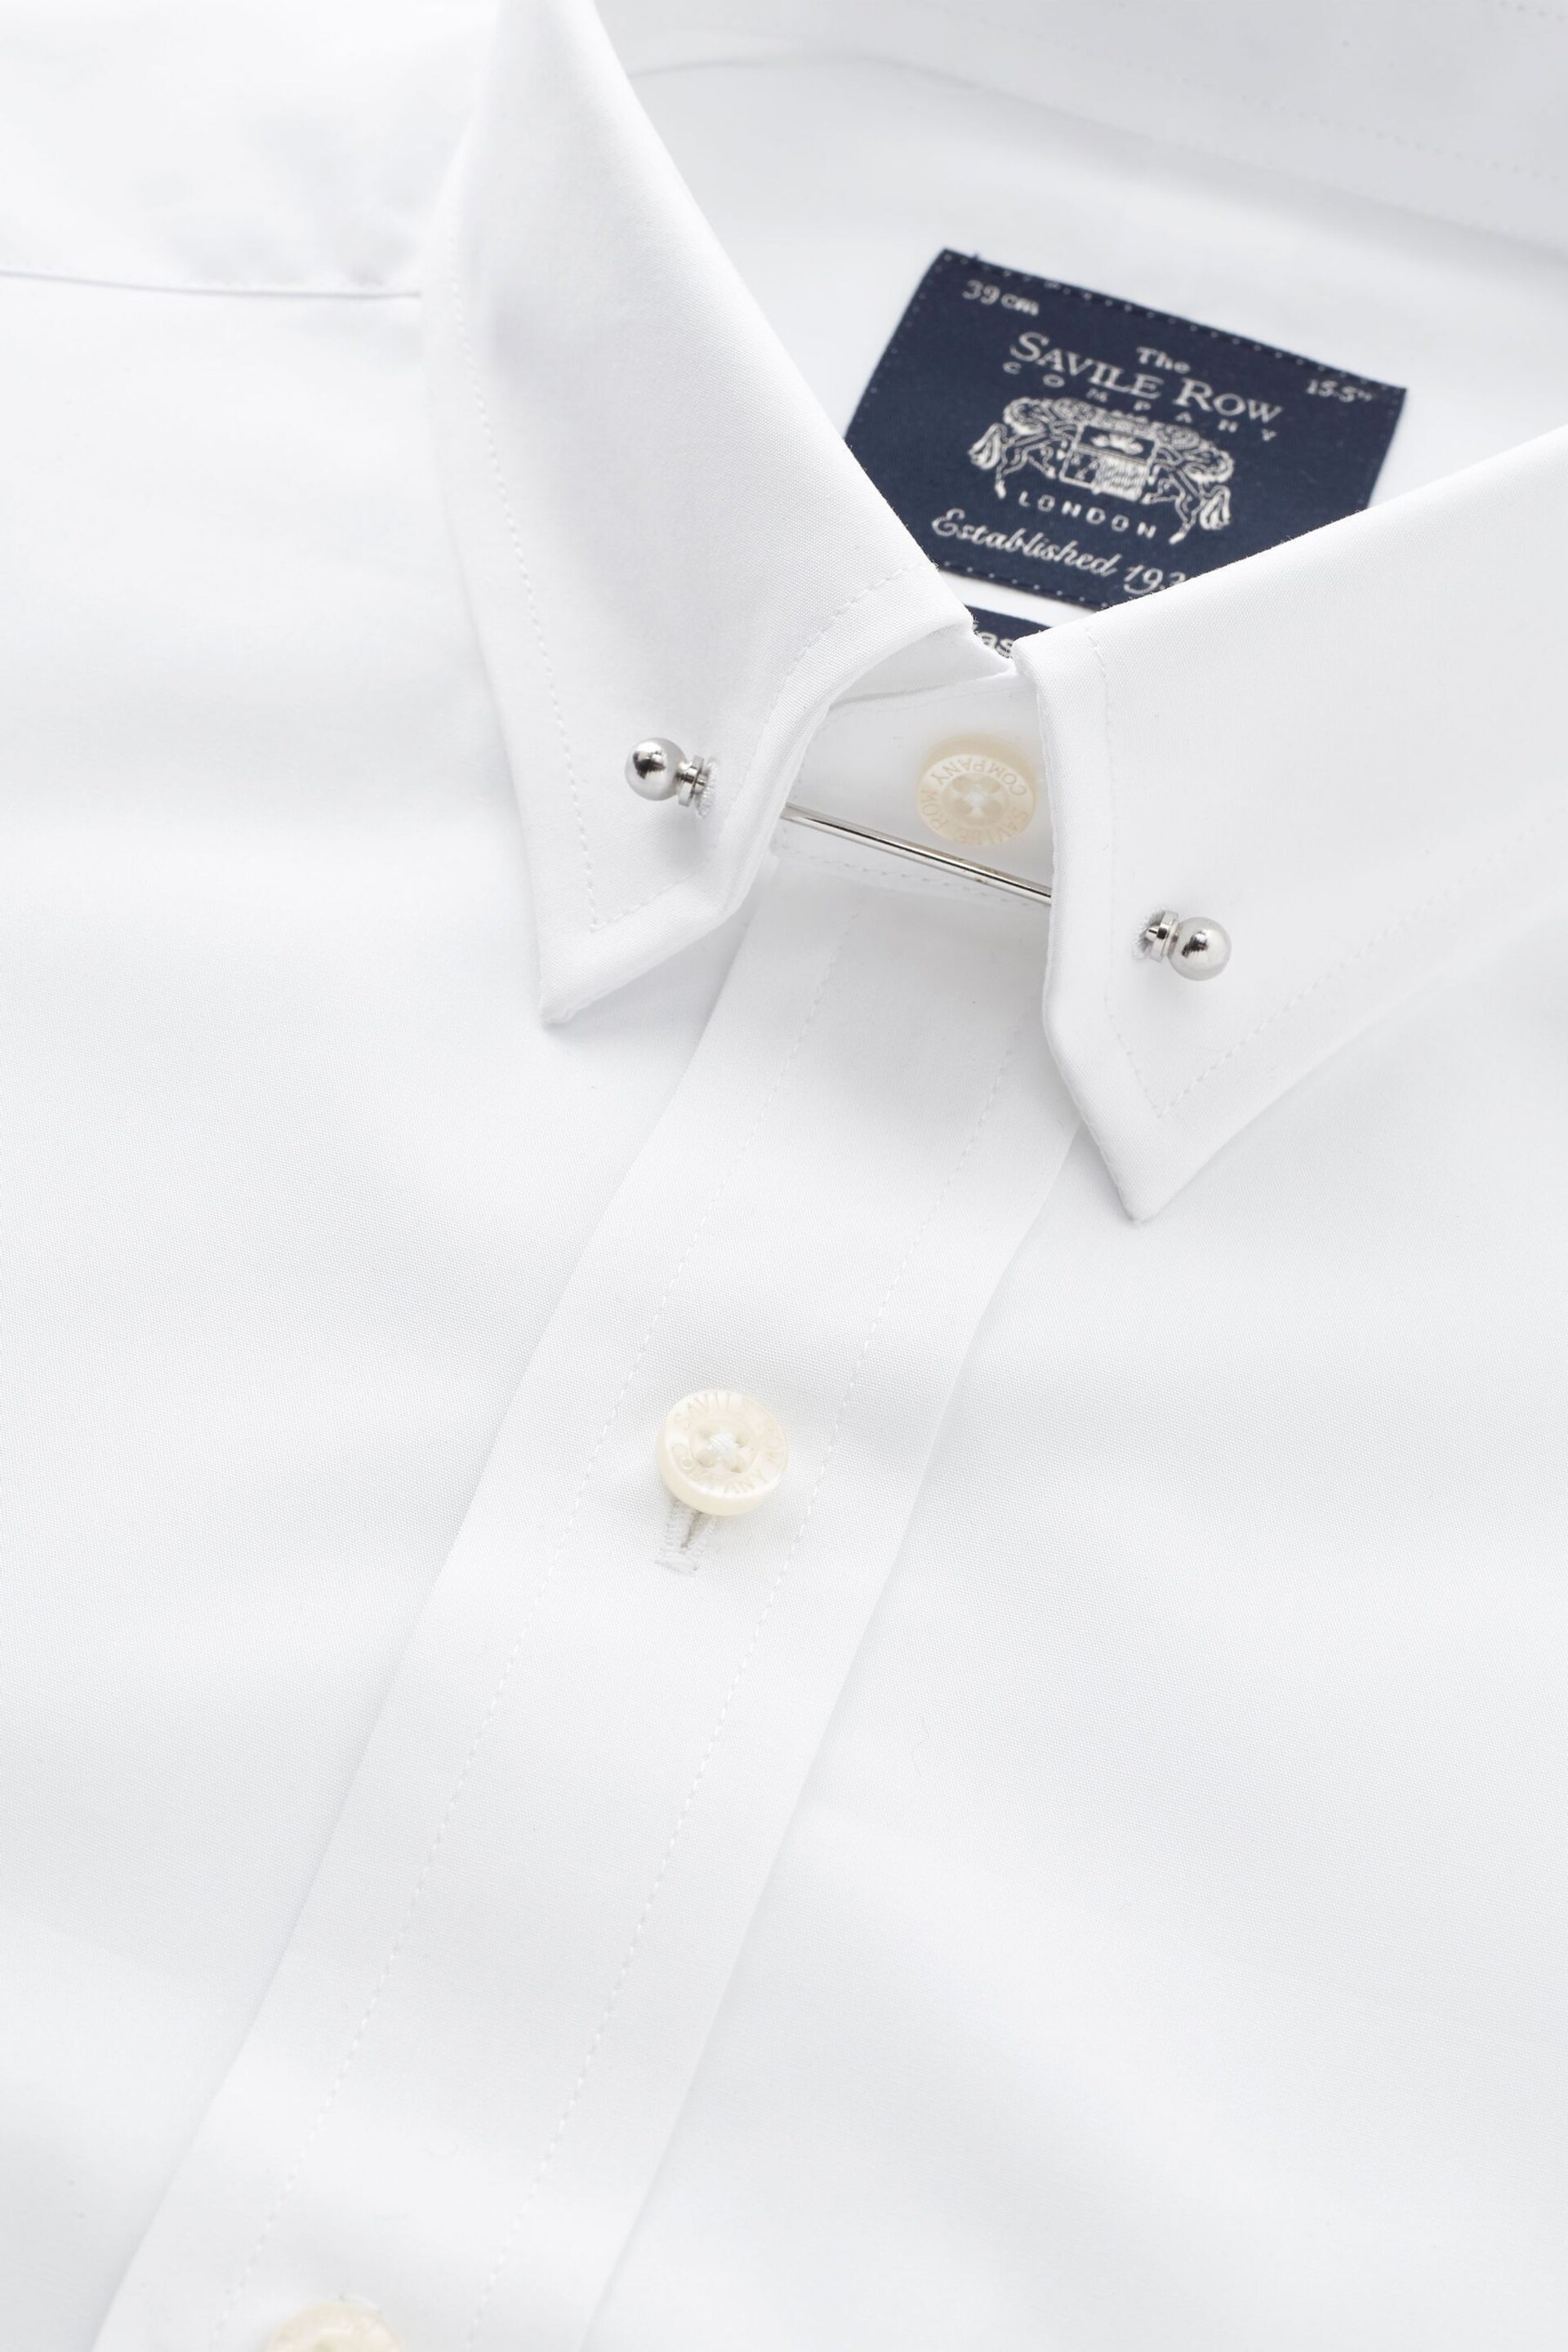 Savile Row Co White Extra Slim Pin Collar Double Cuff Shirt - Image 3 of 4